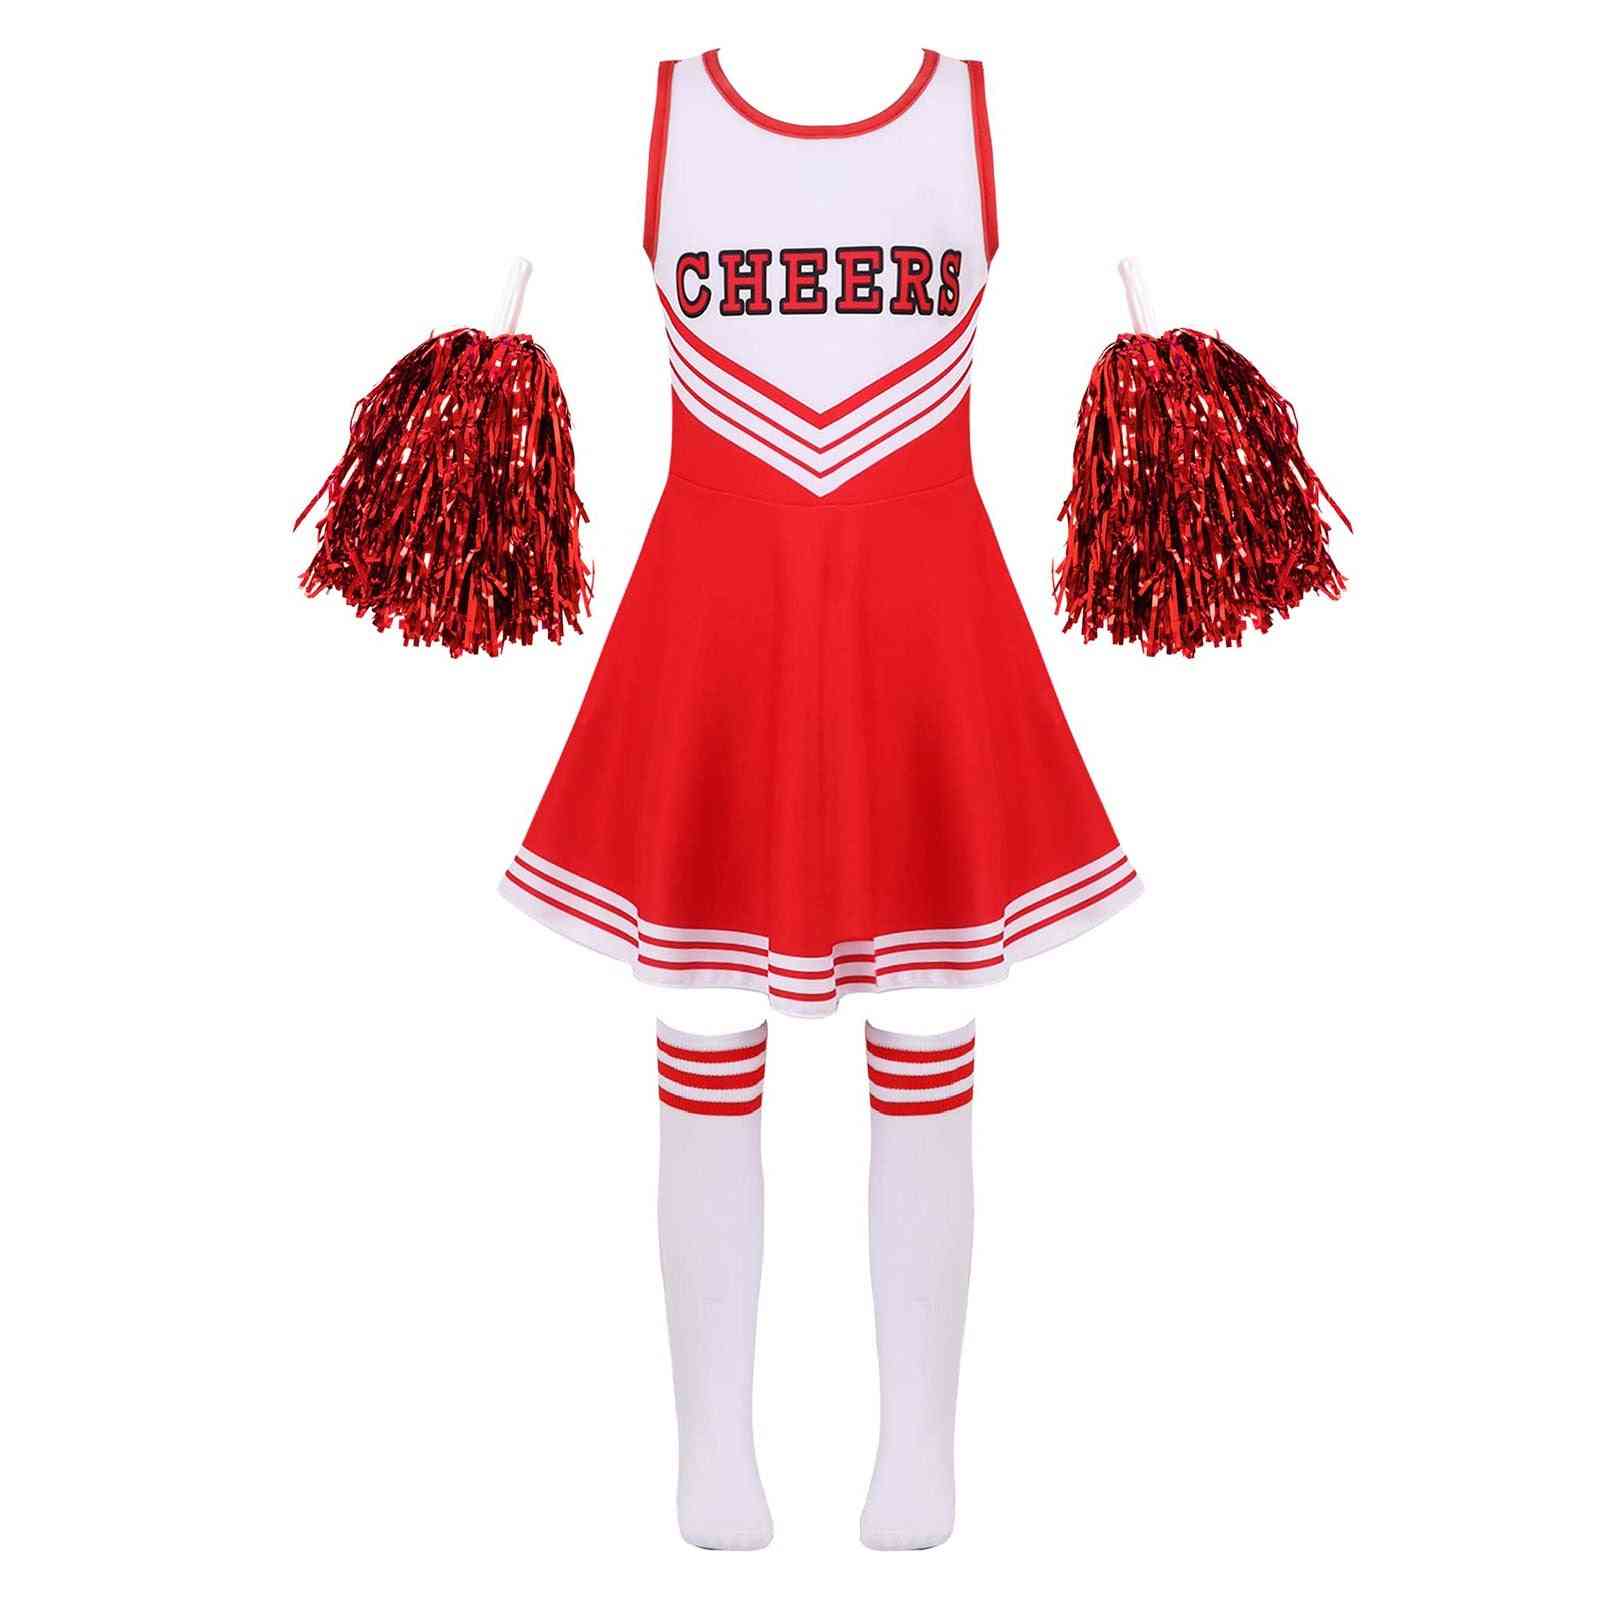 Girls Cheerleading Uniform Dance Costume For Kids Cheerleader